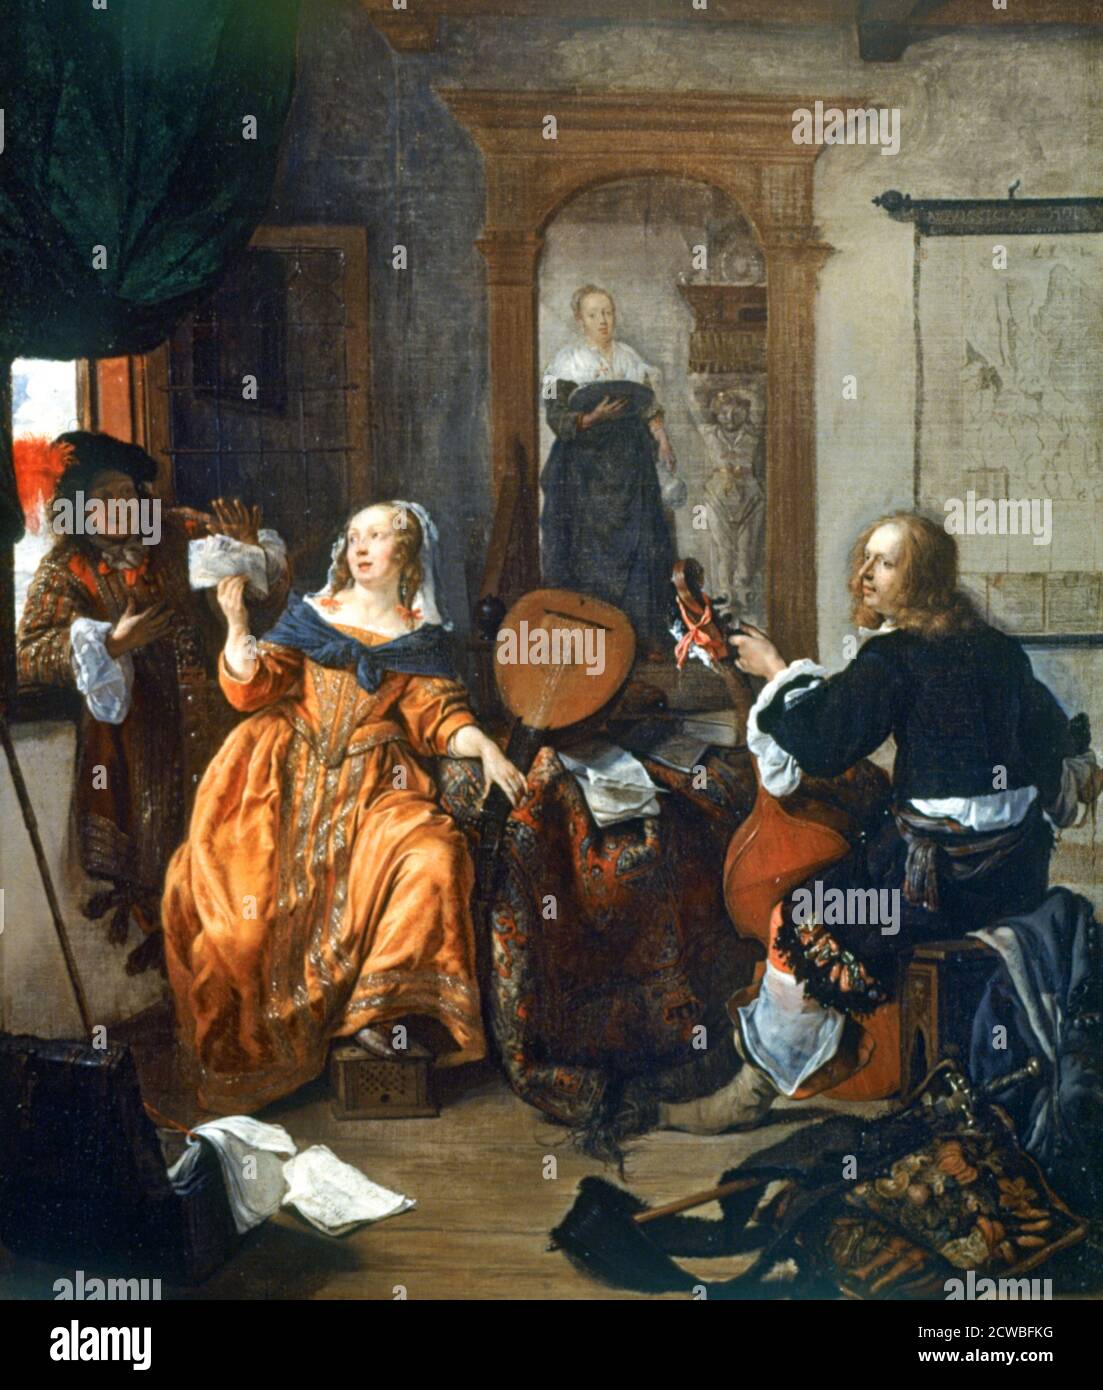 Un partito musicale', 1659. Artista: Gabriel Metsu. Metsu era un nativo di Leiden, dove era probabilmente un allievo di Gerard Dou. Metropolitan Museum of Art, New York. Foto Stock